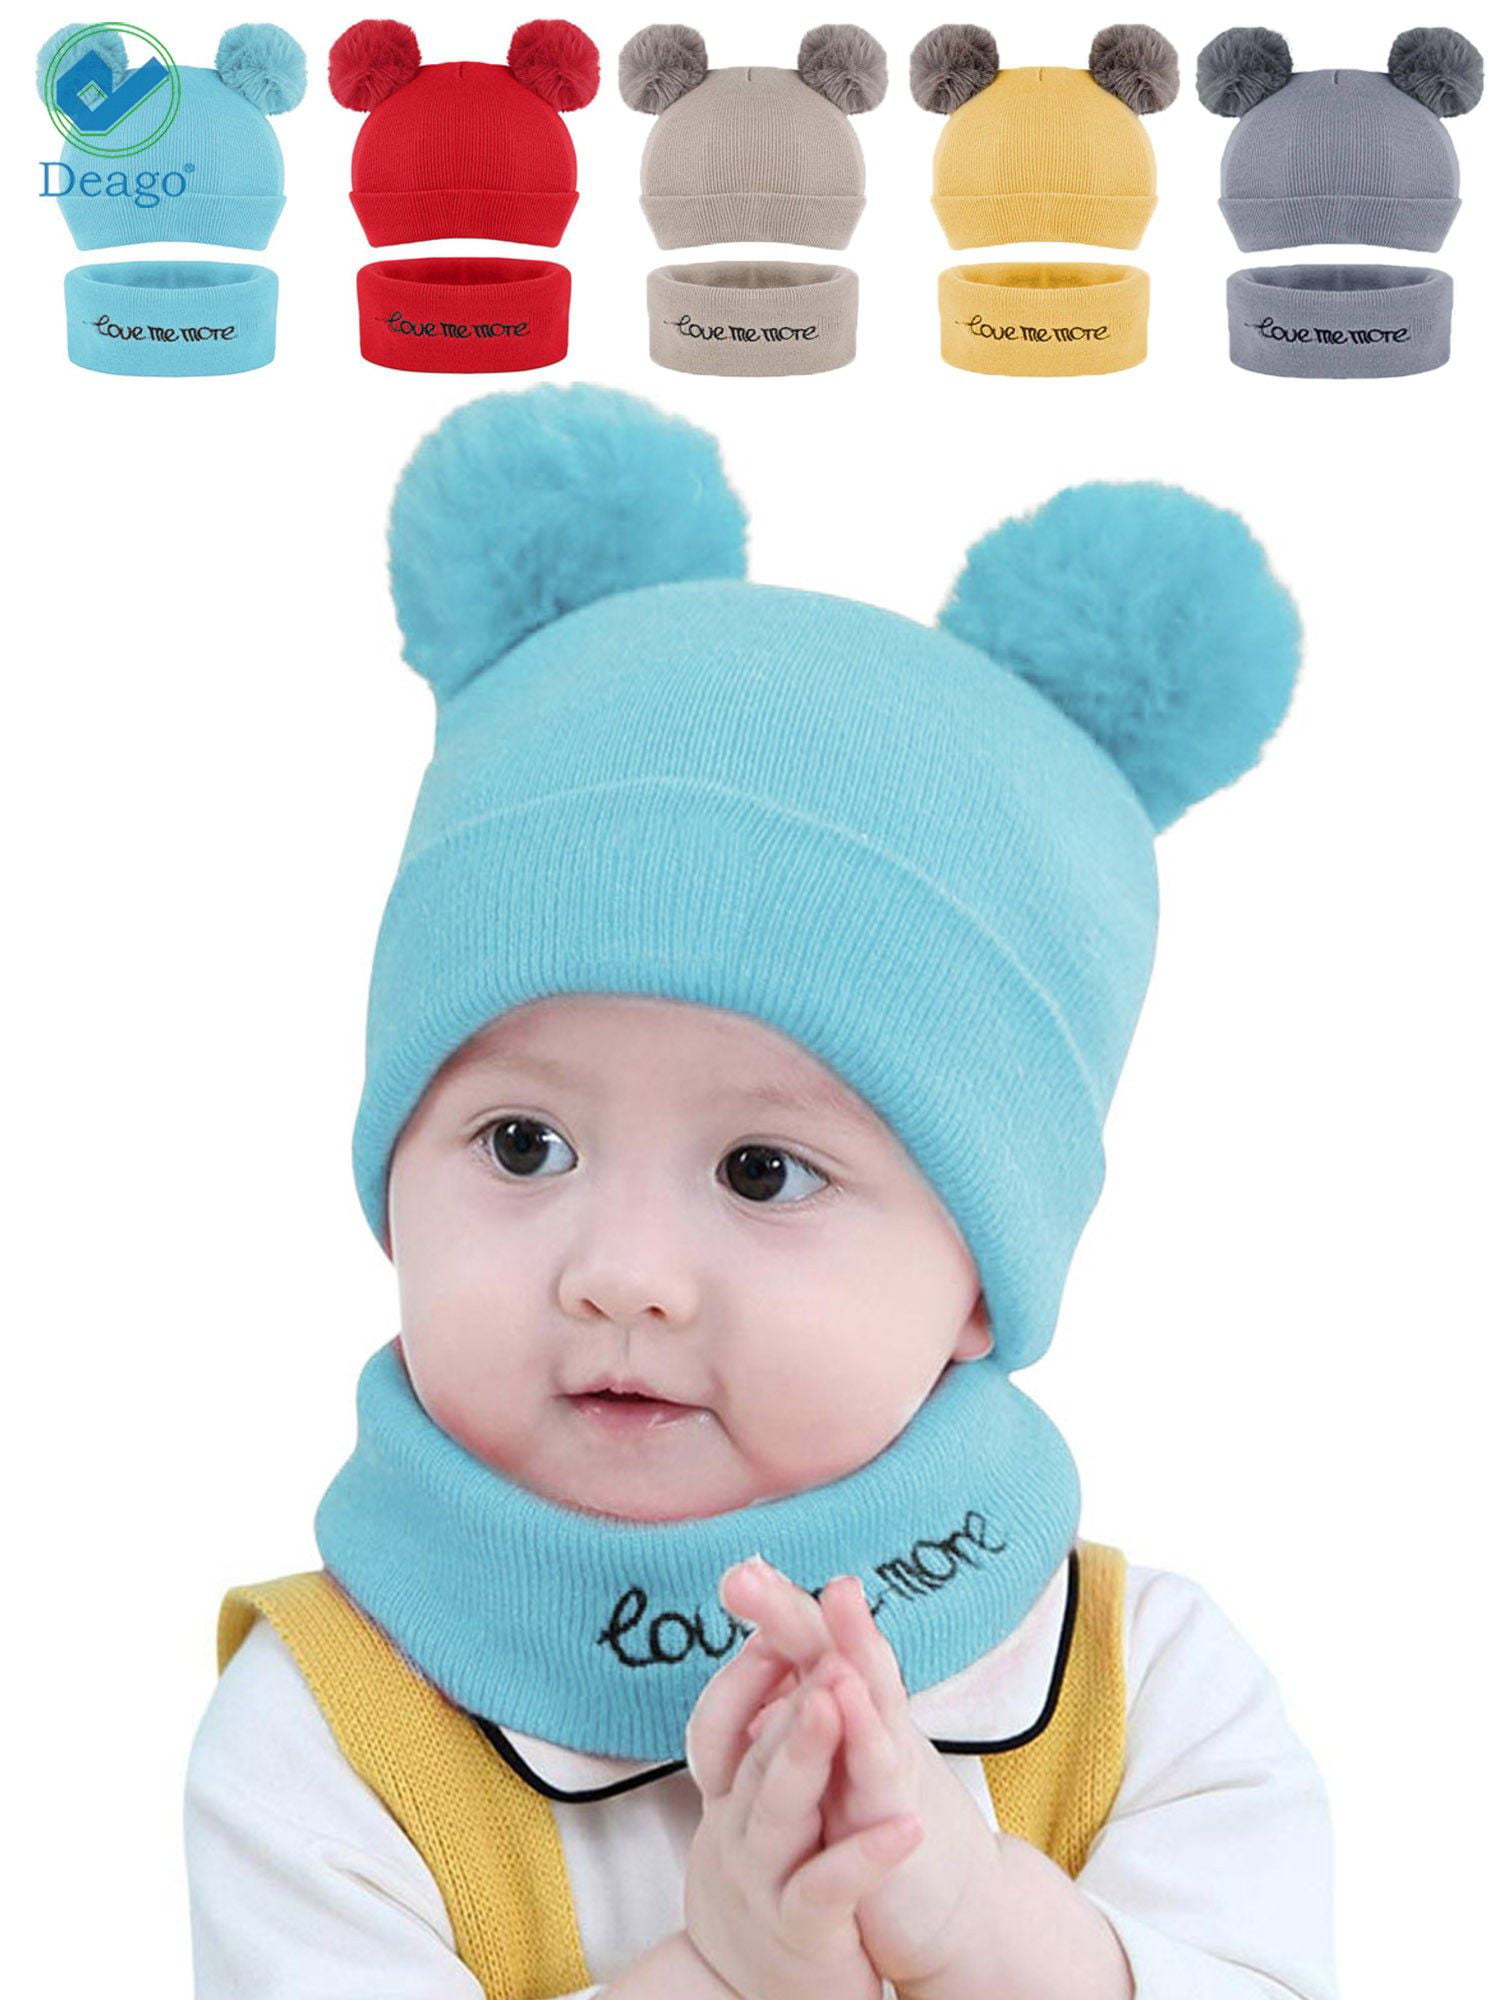 Sugar Skull Unisex Lovely Cotton Beanie Hats for Cute Baby Boy/Girl Soft Toddler Infant Cap Fond dream Halloween